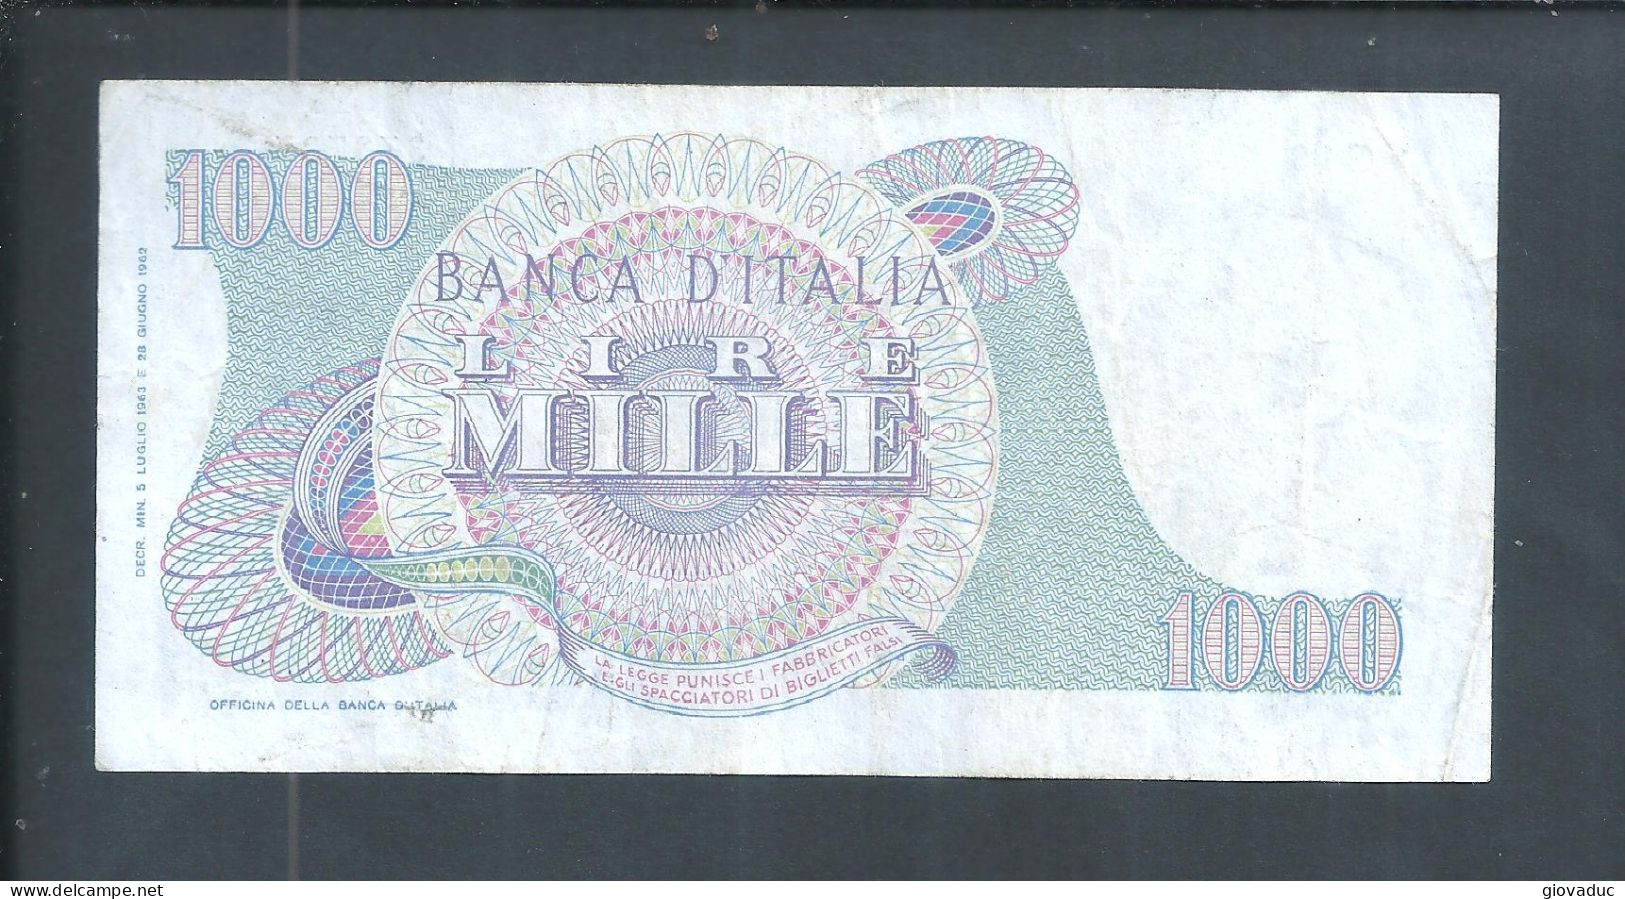 Banconota Italia 1000 Lire 28 Giugno 1962 - Rarita Unica N° C18 - 373737 - Filigrana - Vedi Foto Firme Carli-Ripa - - [ 7] Fautés & Variétés